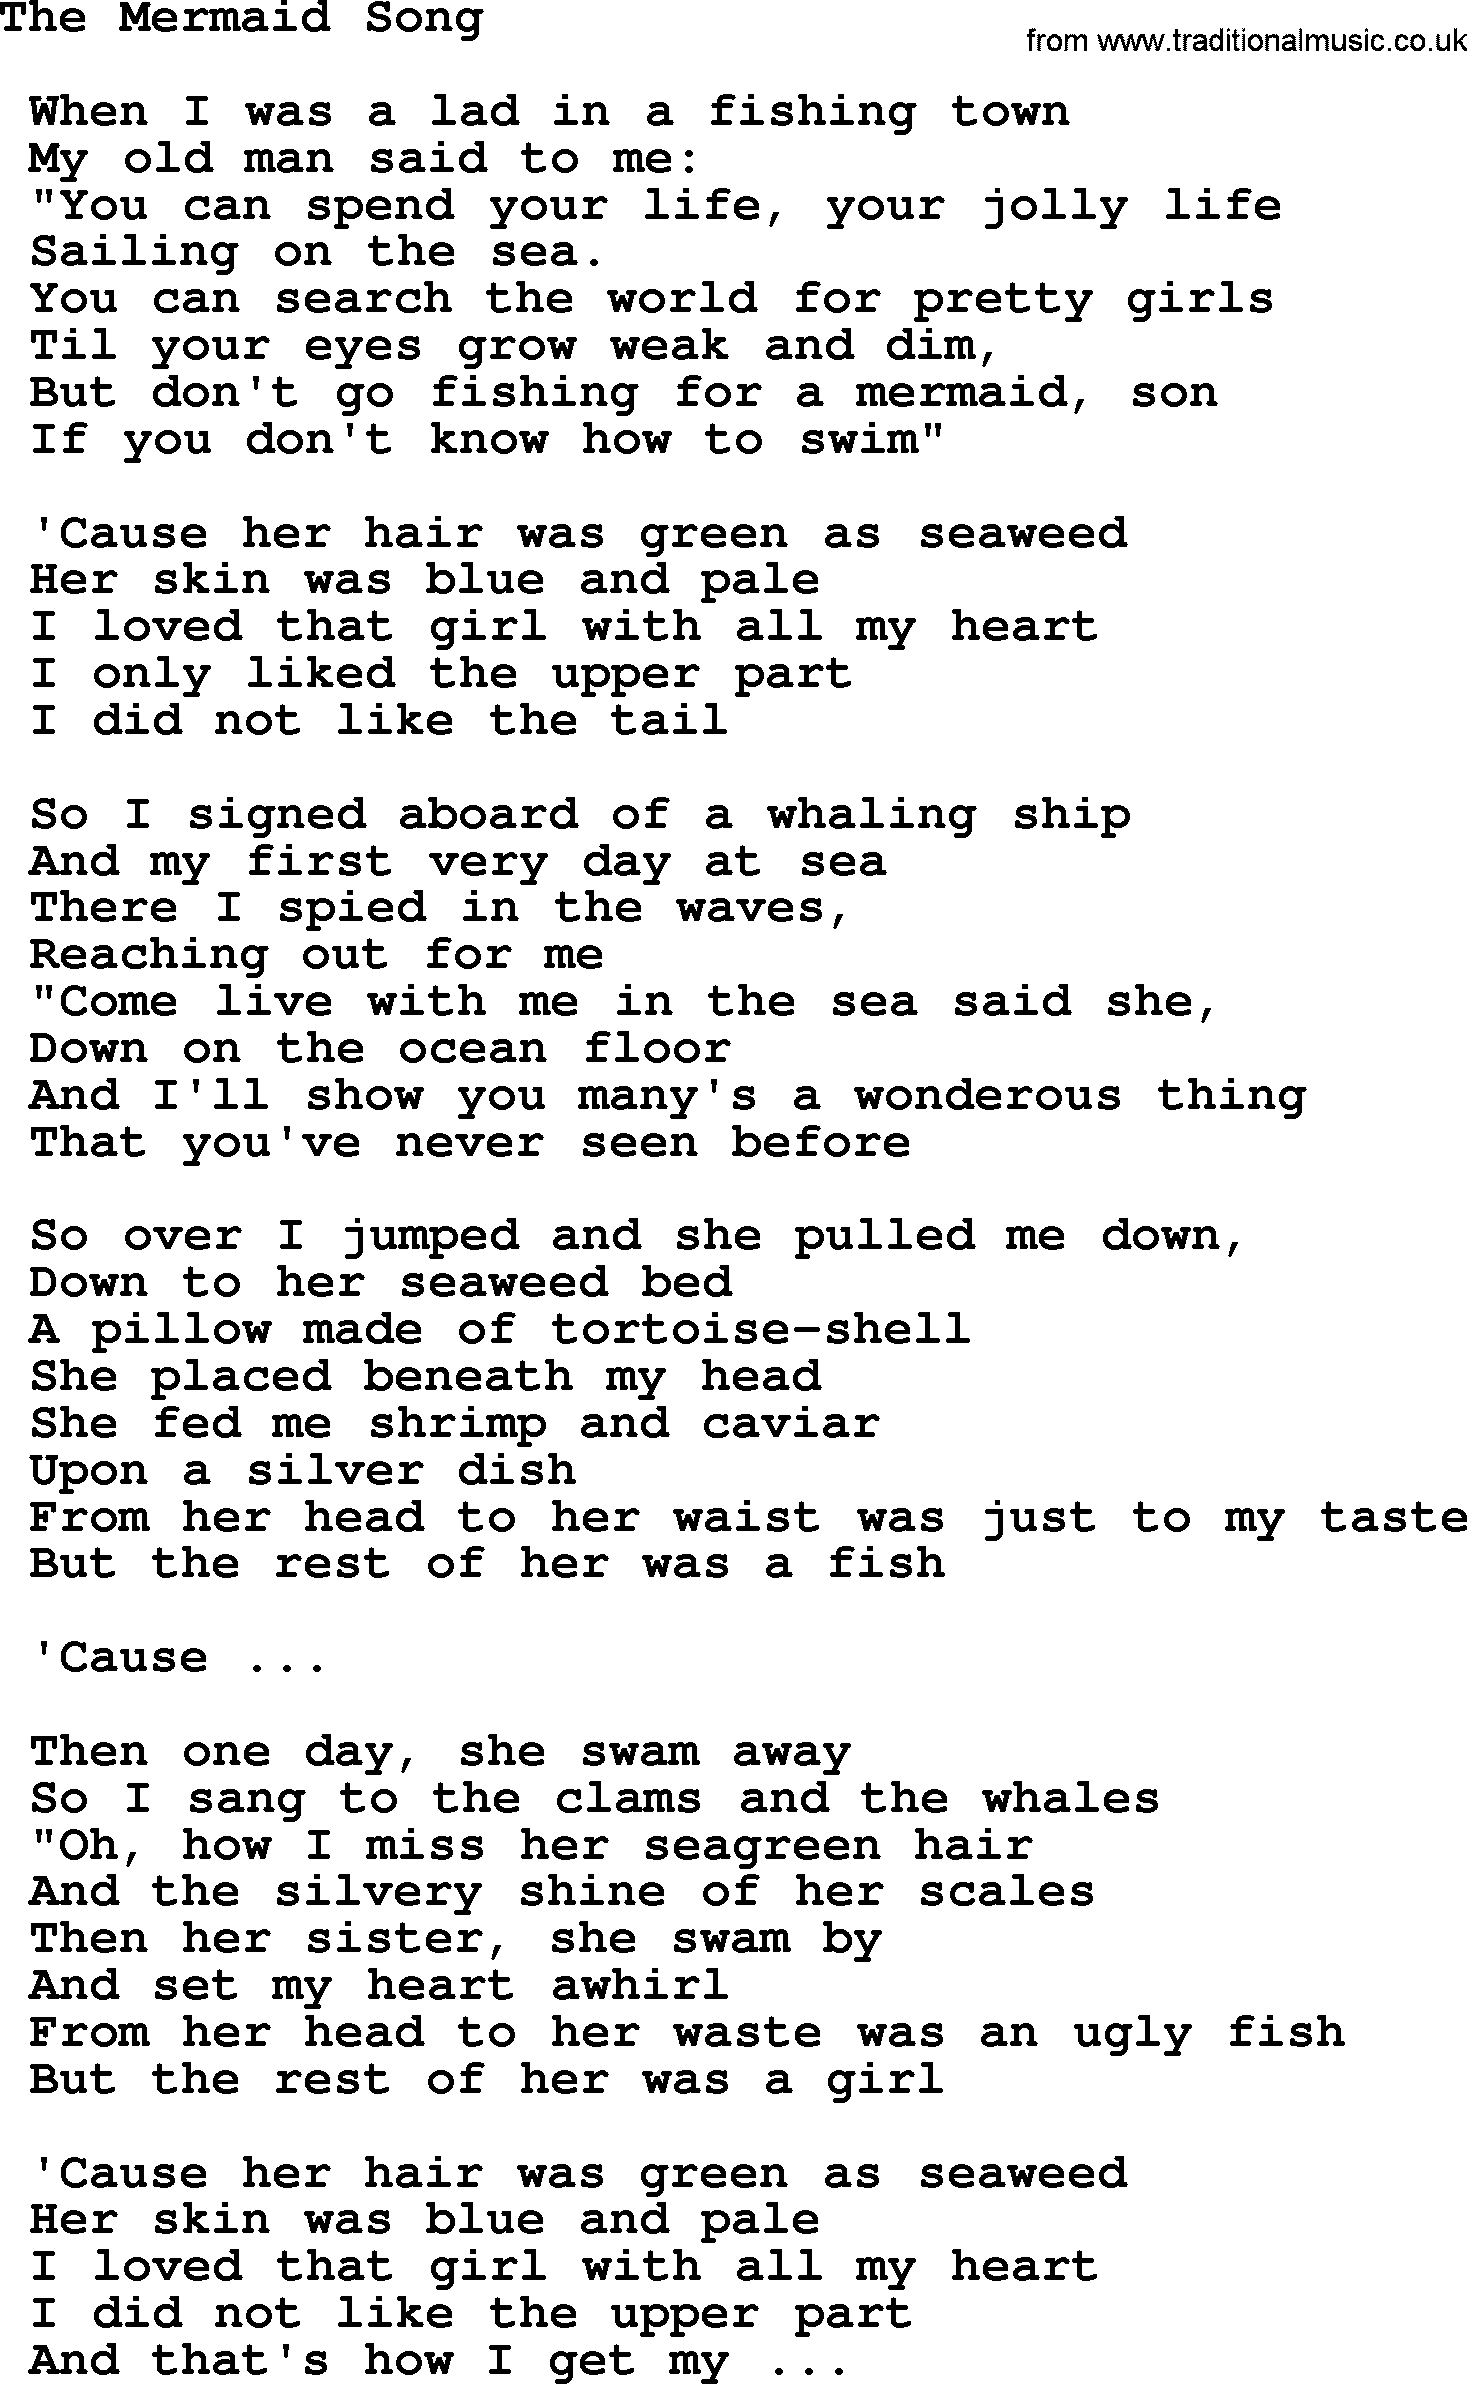 Sea Song or Shantie: The Mermaid Song, lyrics